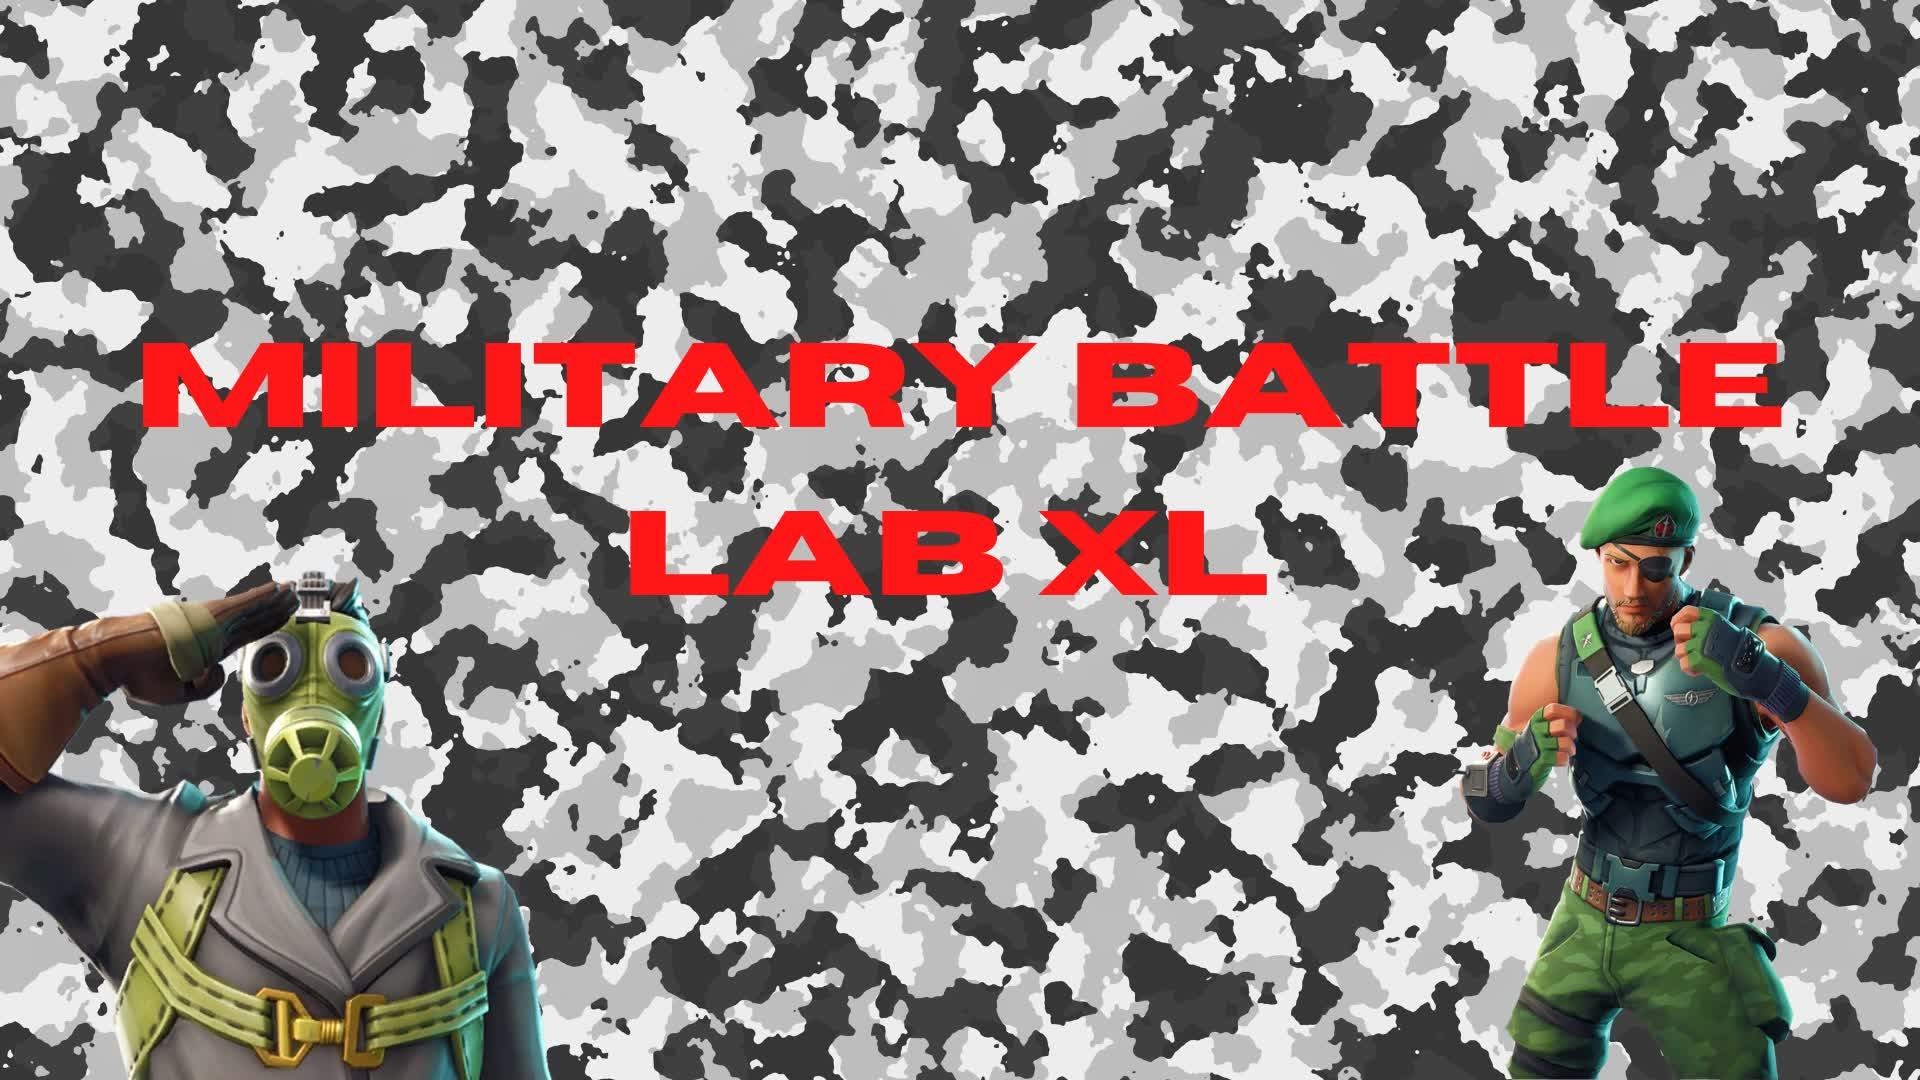 Military Battle Lab XL